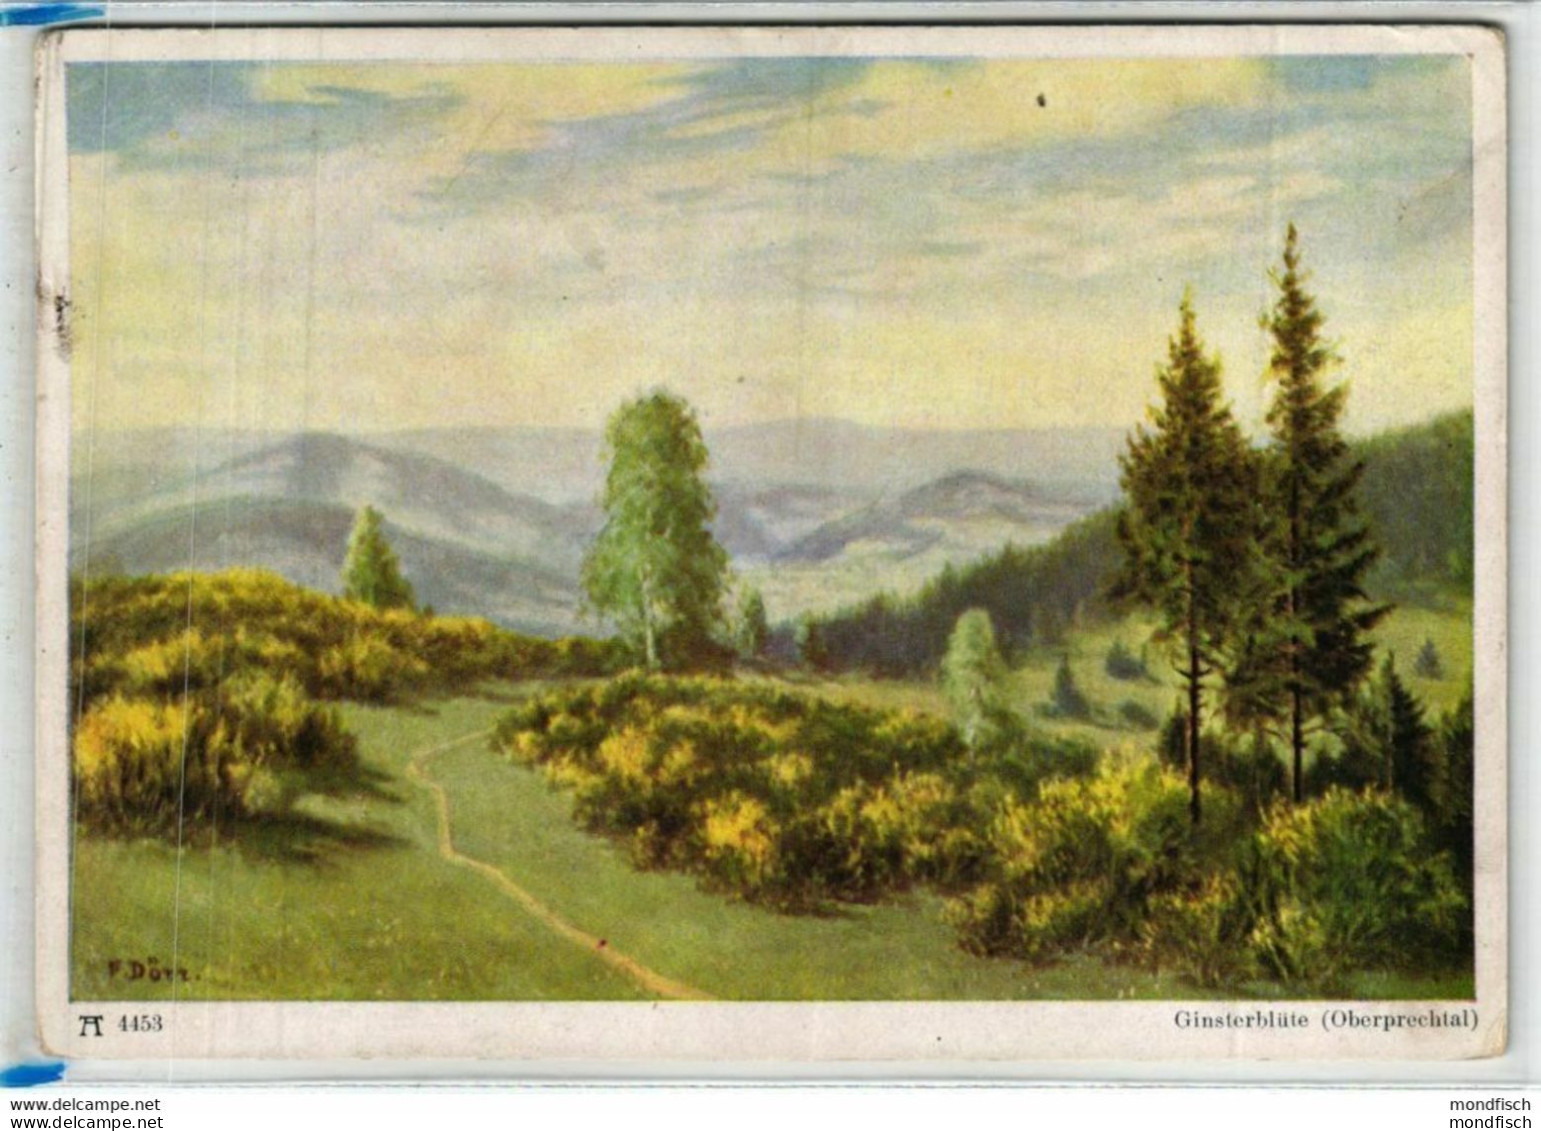 Ginsterblüte Im Oberprechtal - F. Dörr - Gemälde - Elzach